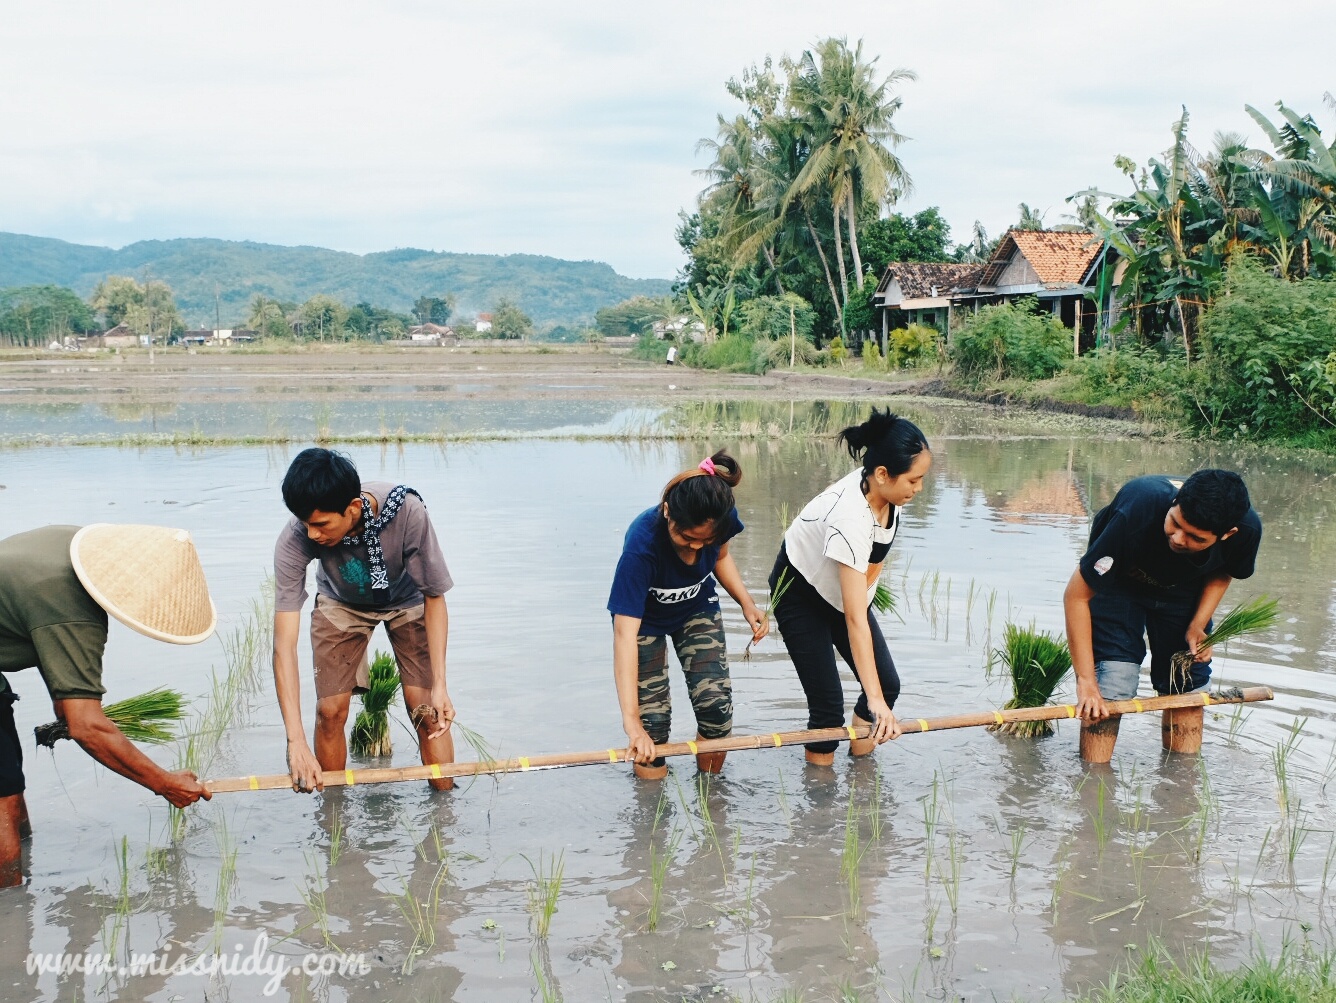 wisata menanam padi di desa wisata kebon agung bantul yogyakarta